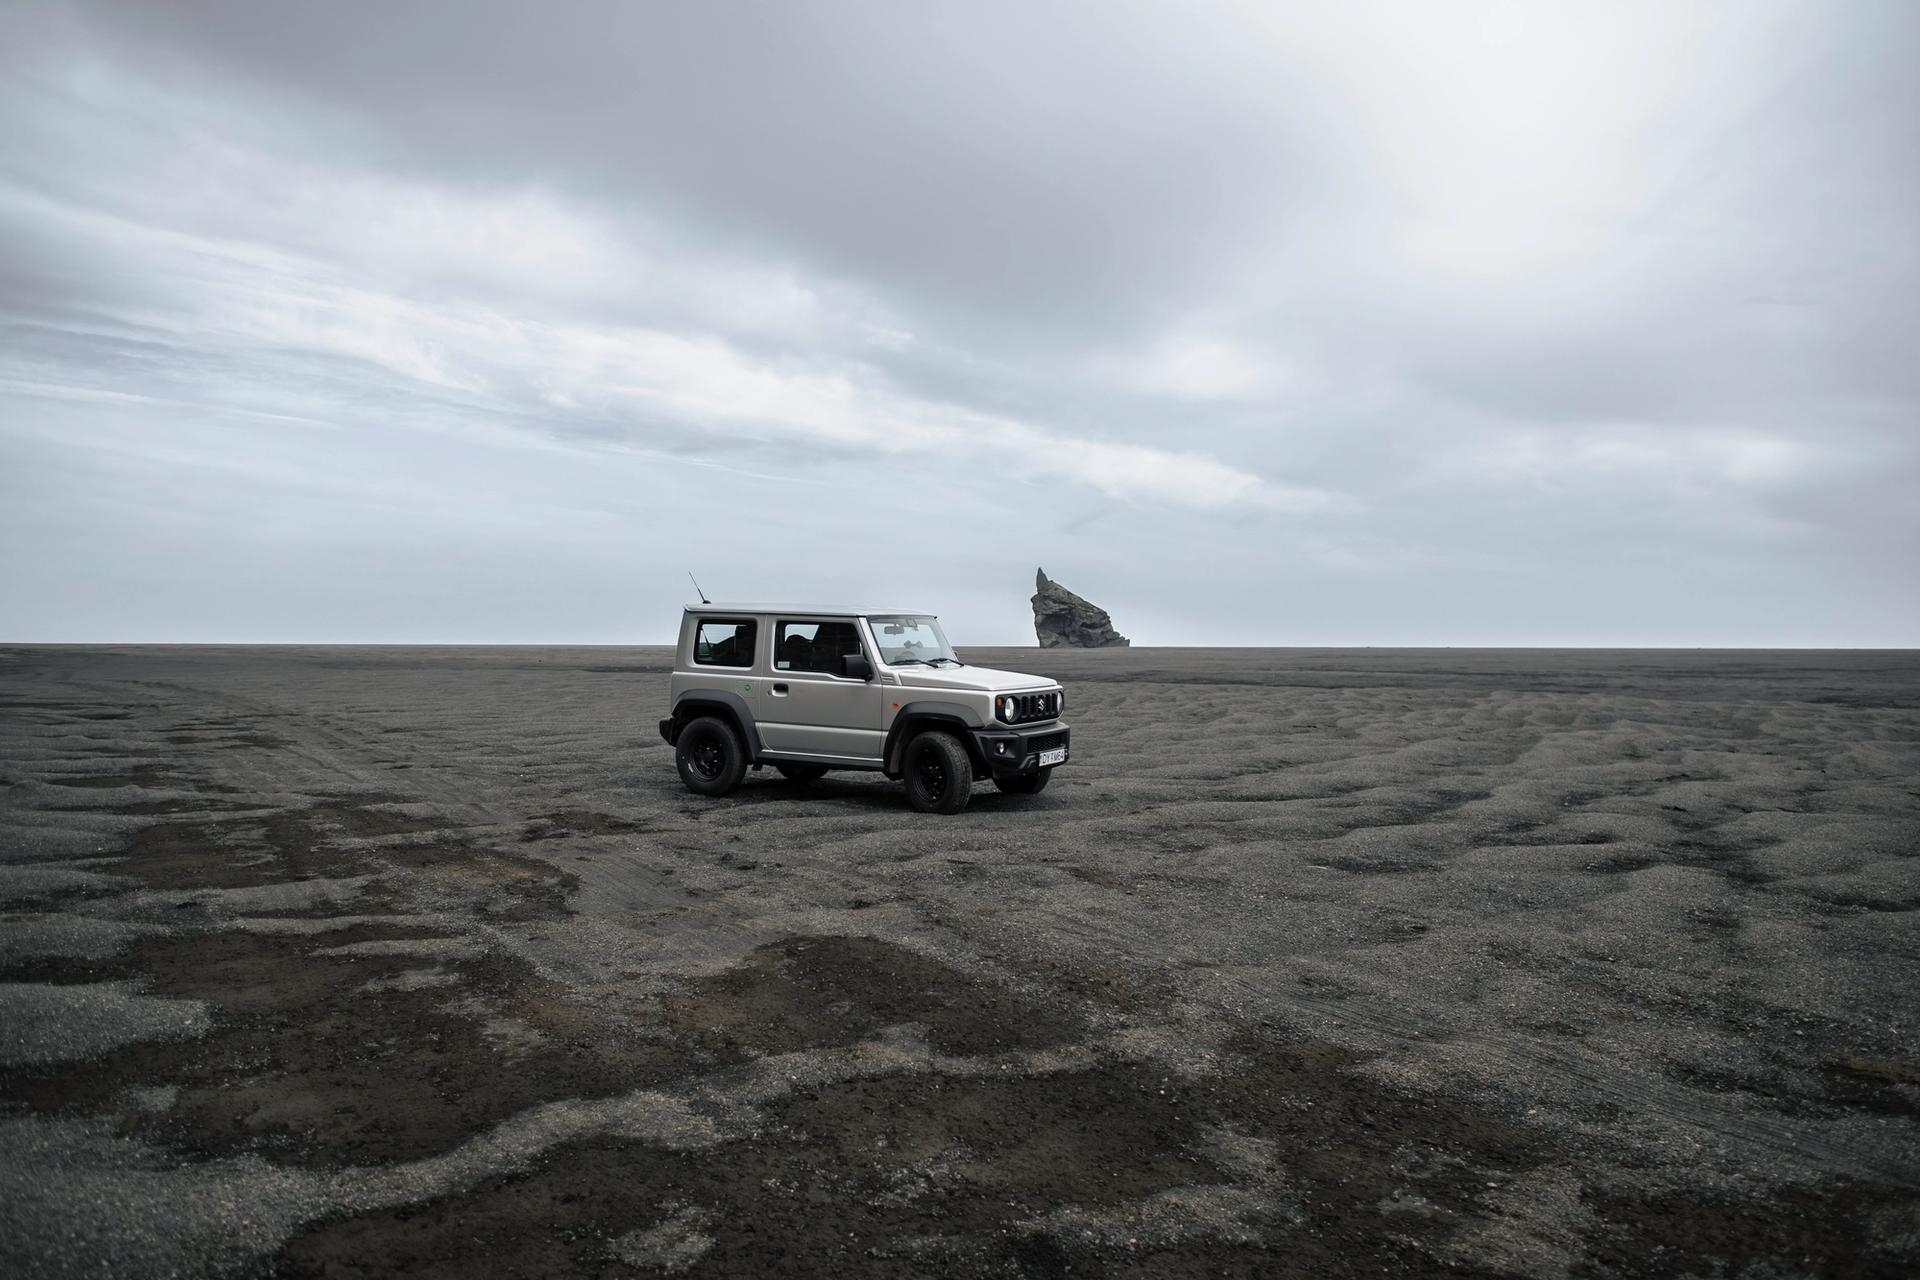 4x4 rental car Suzuki Jimny parked on a black sand beach in Iceland